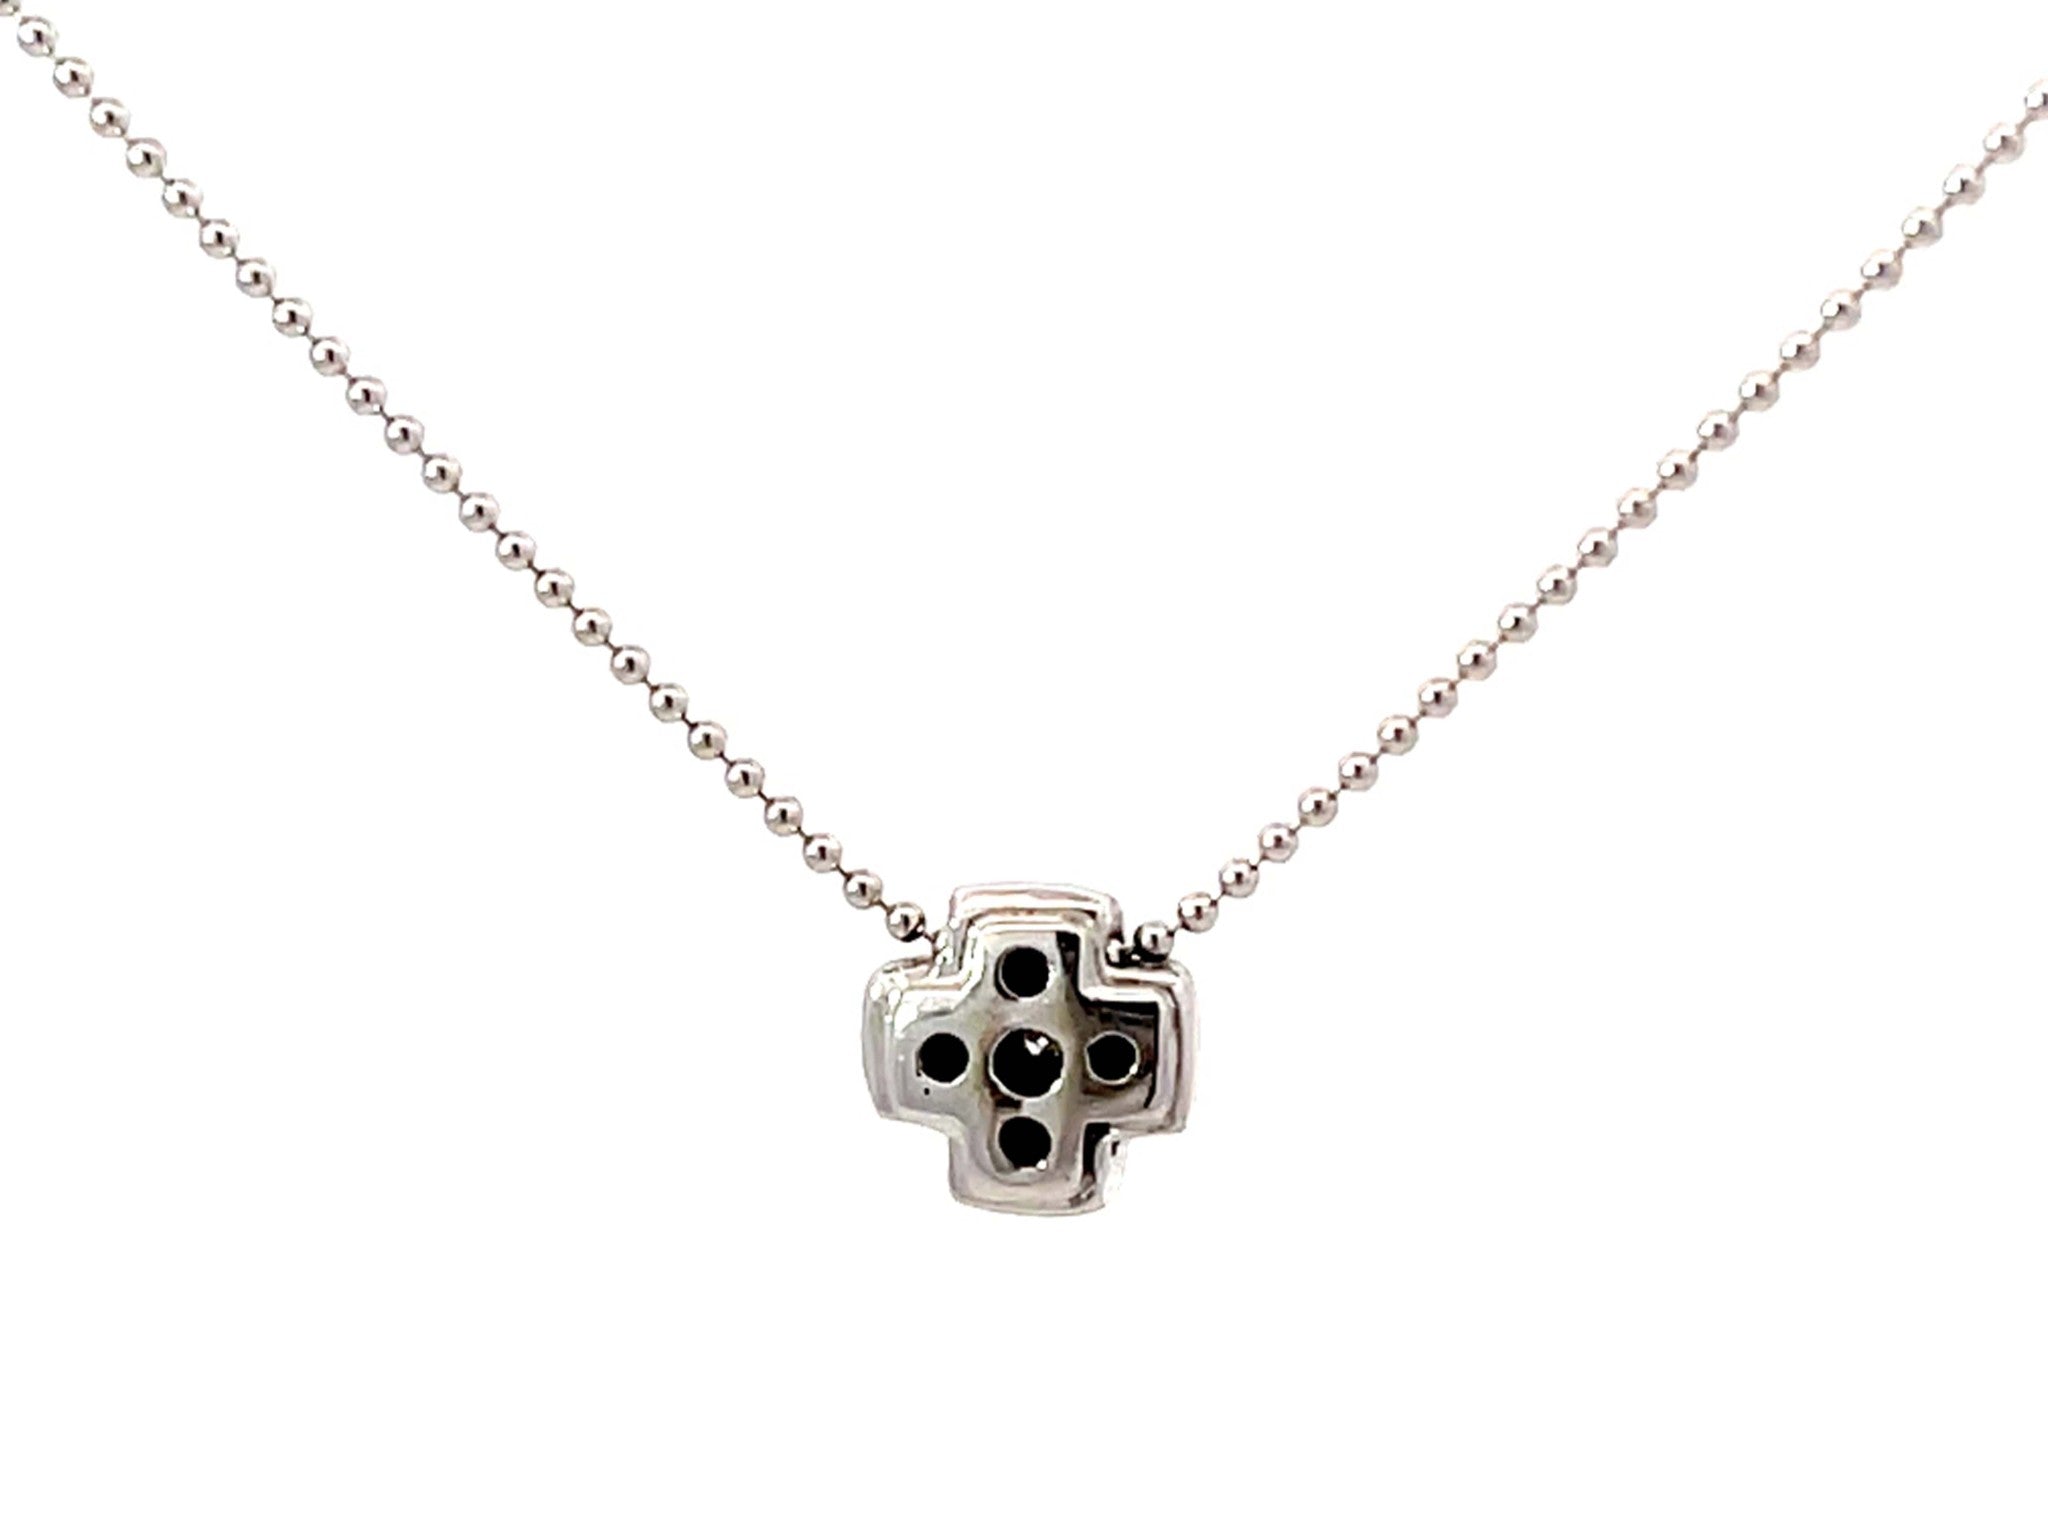 Small Diamond Cross Necklace 14k White Gold